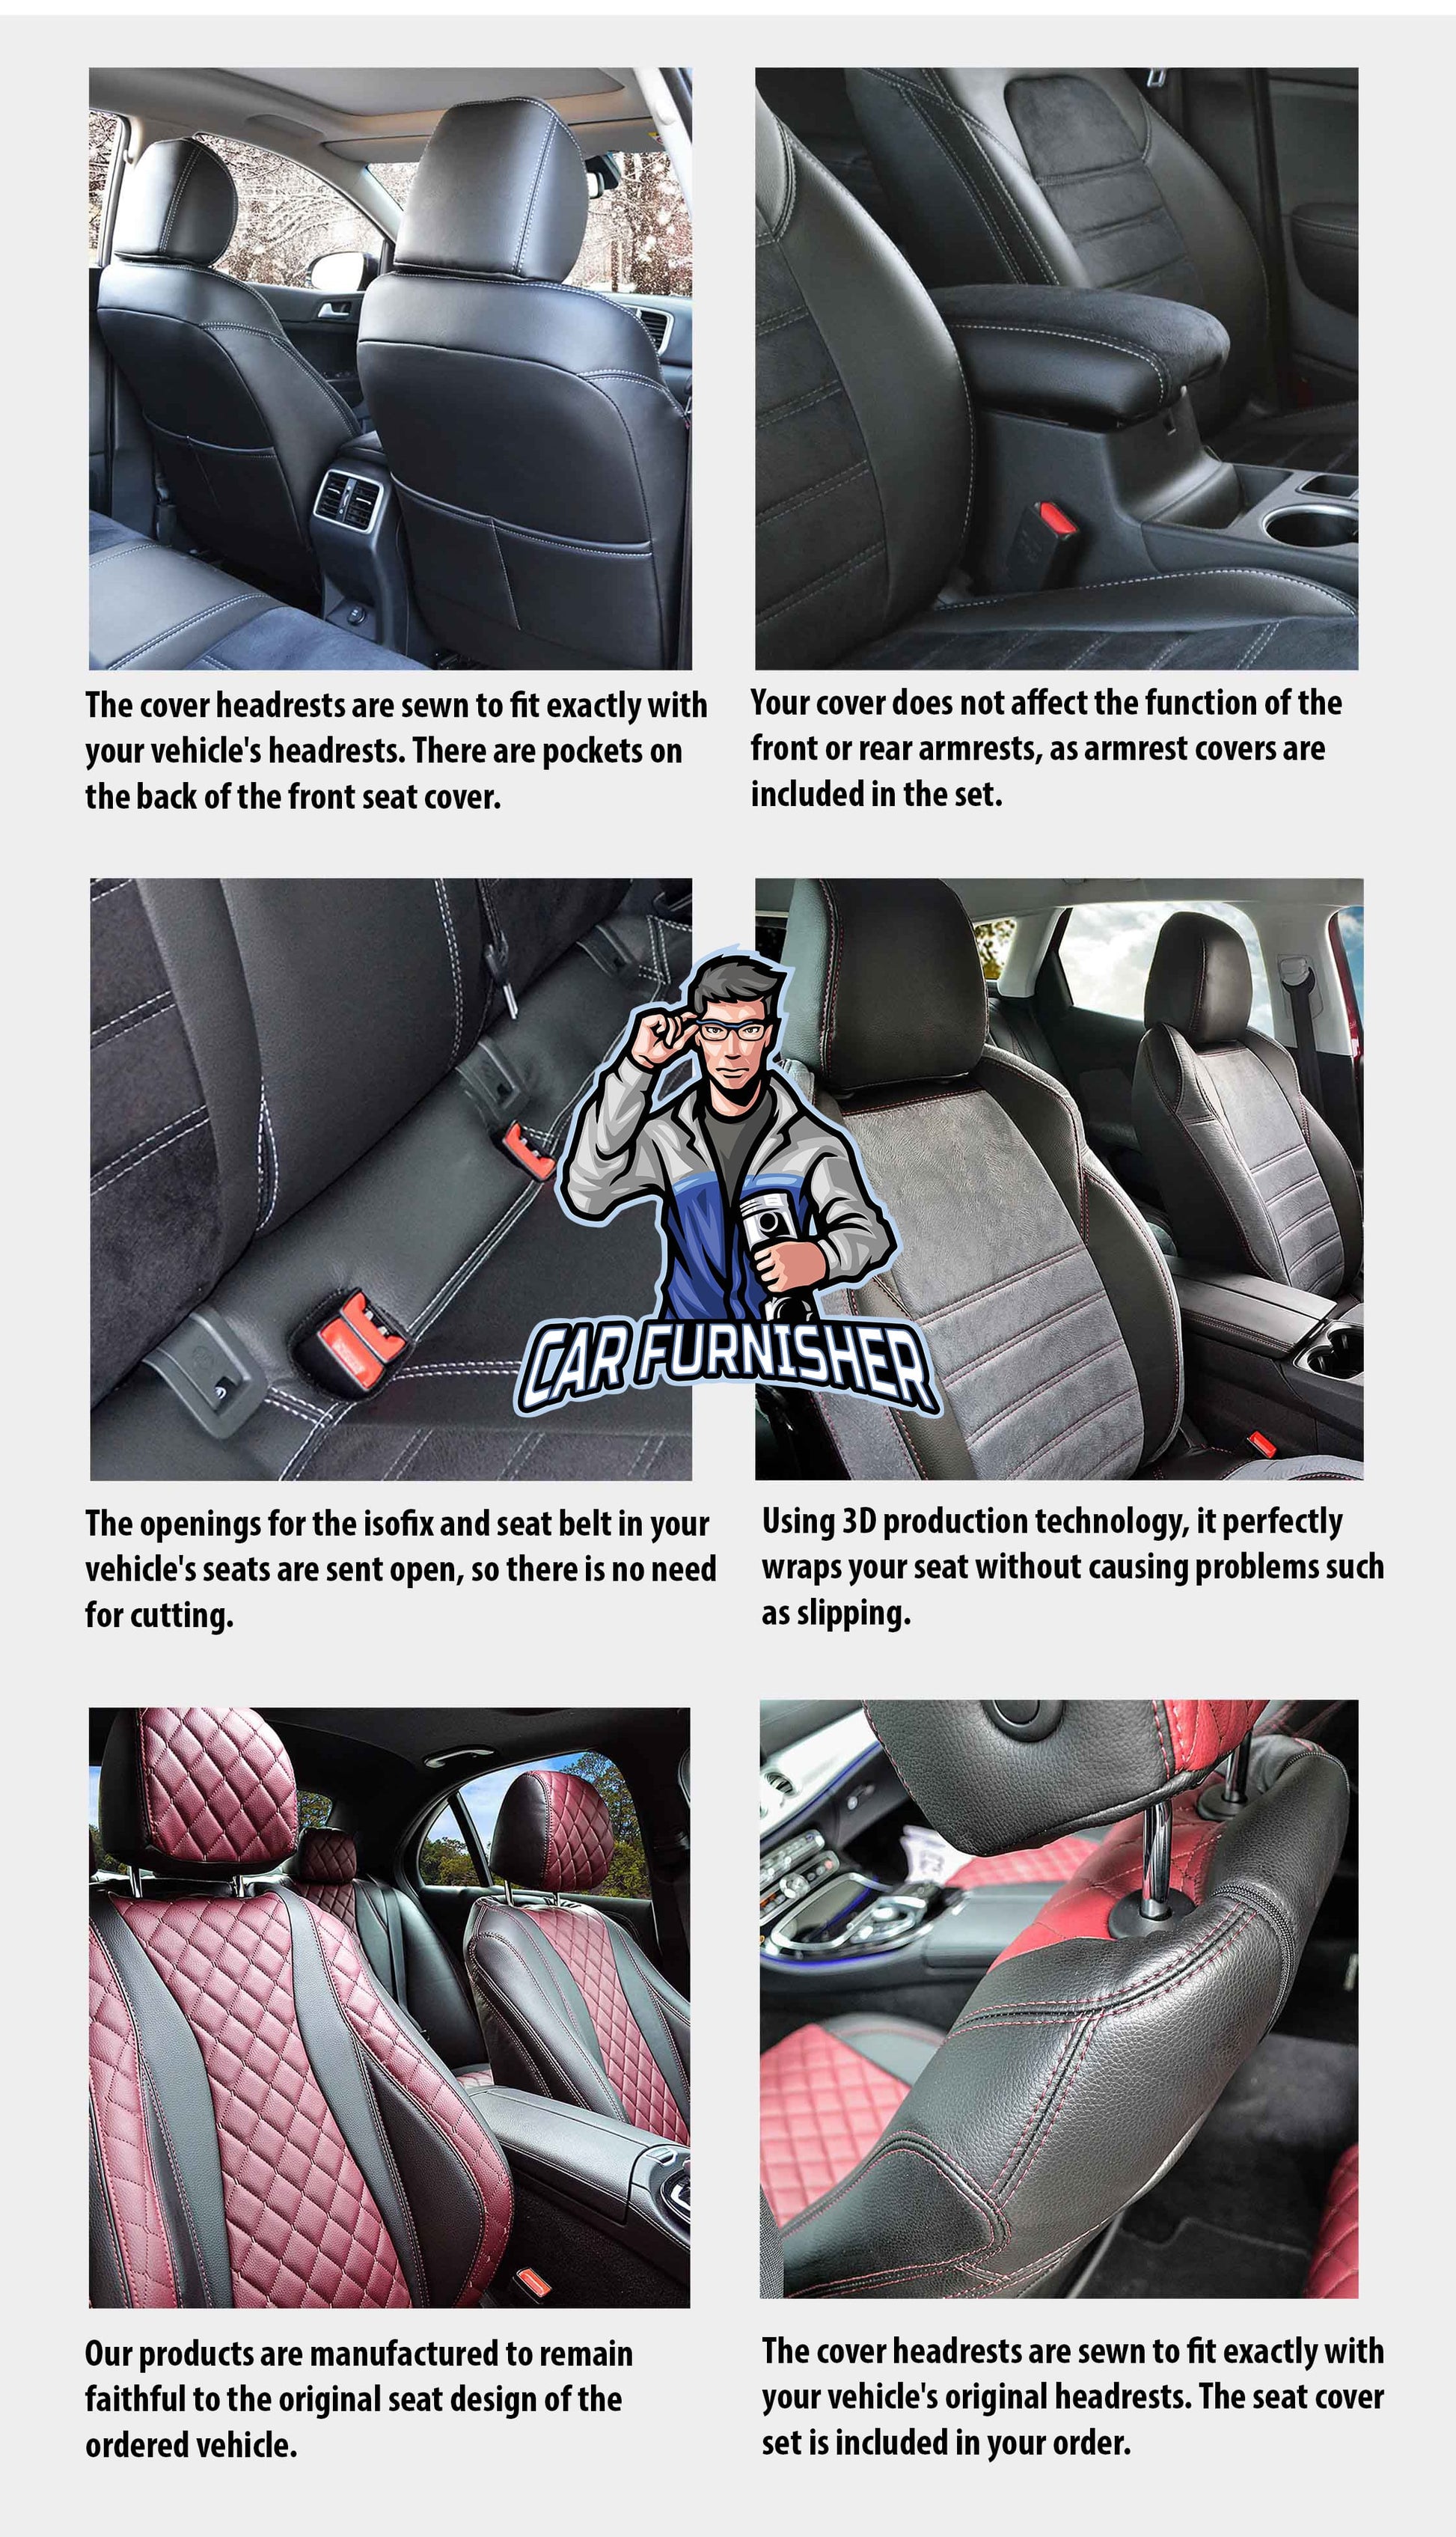 Toyota Avensis Seat Cover Camouflage Waterproof Design Sahara Camo Waterproof Fabric